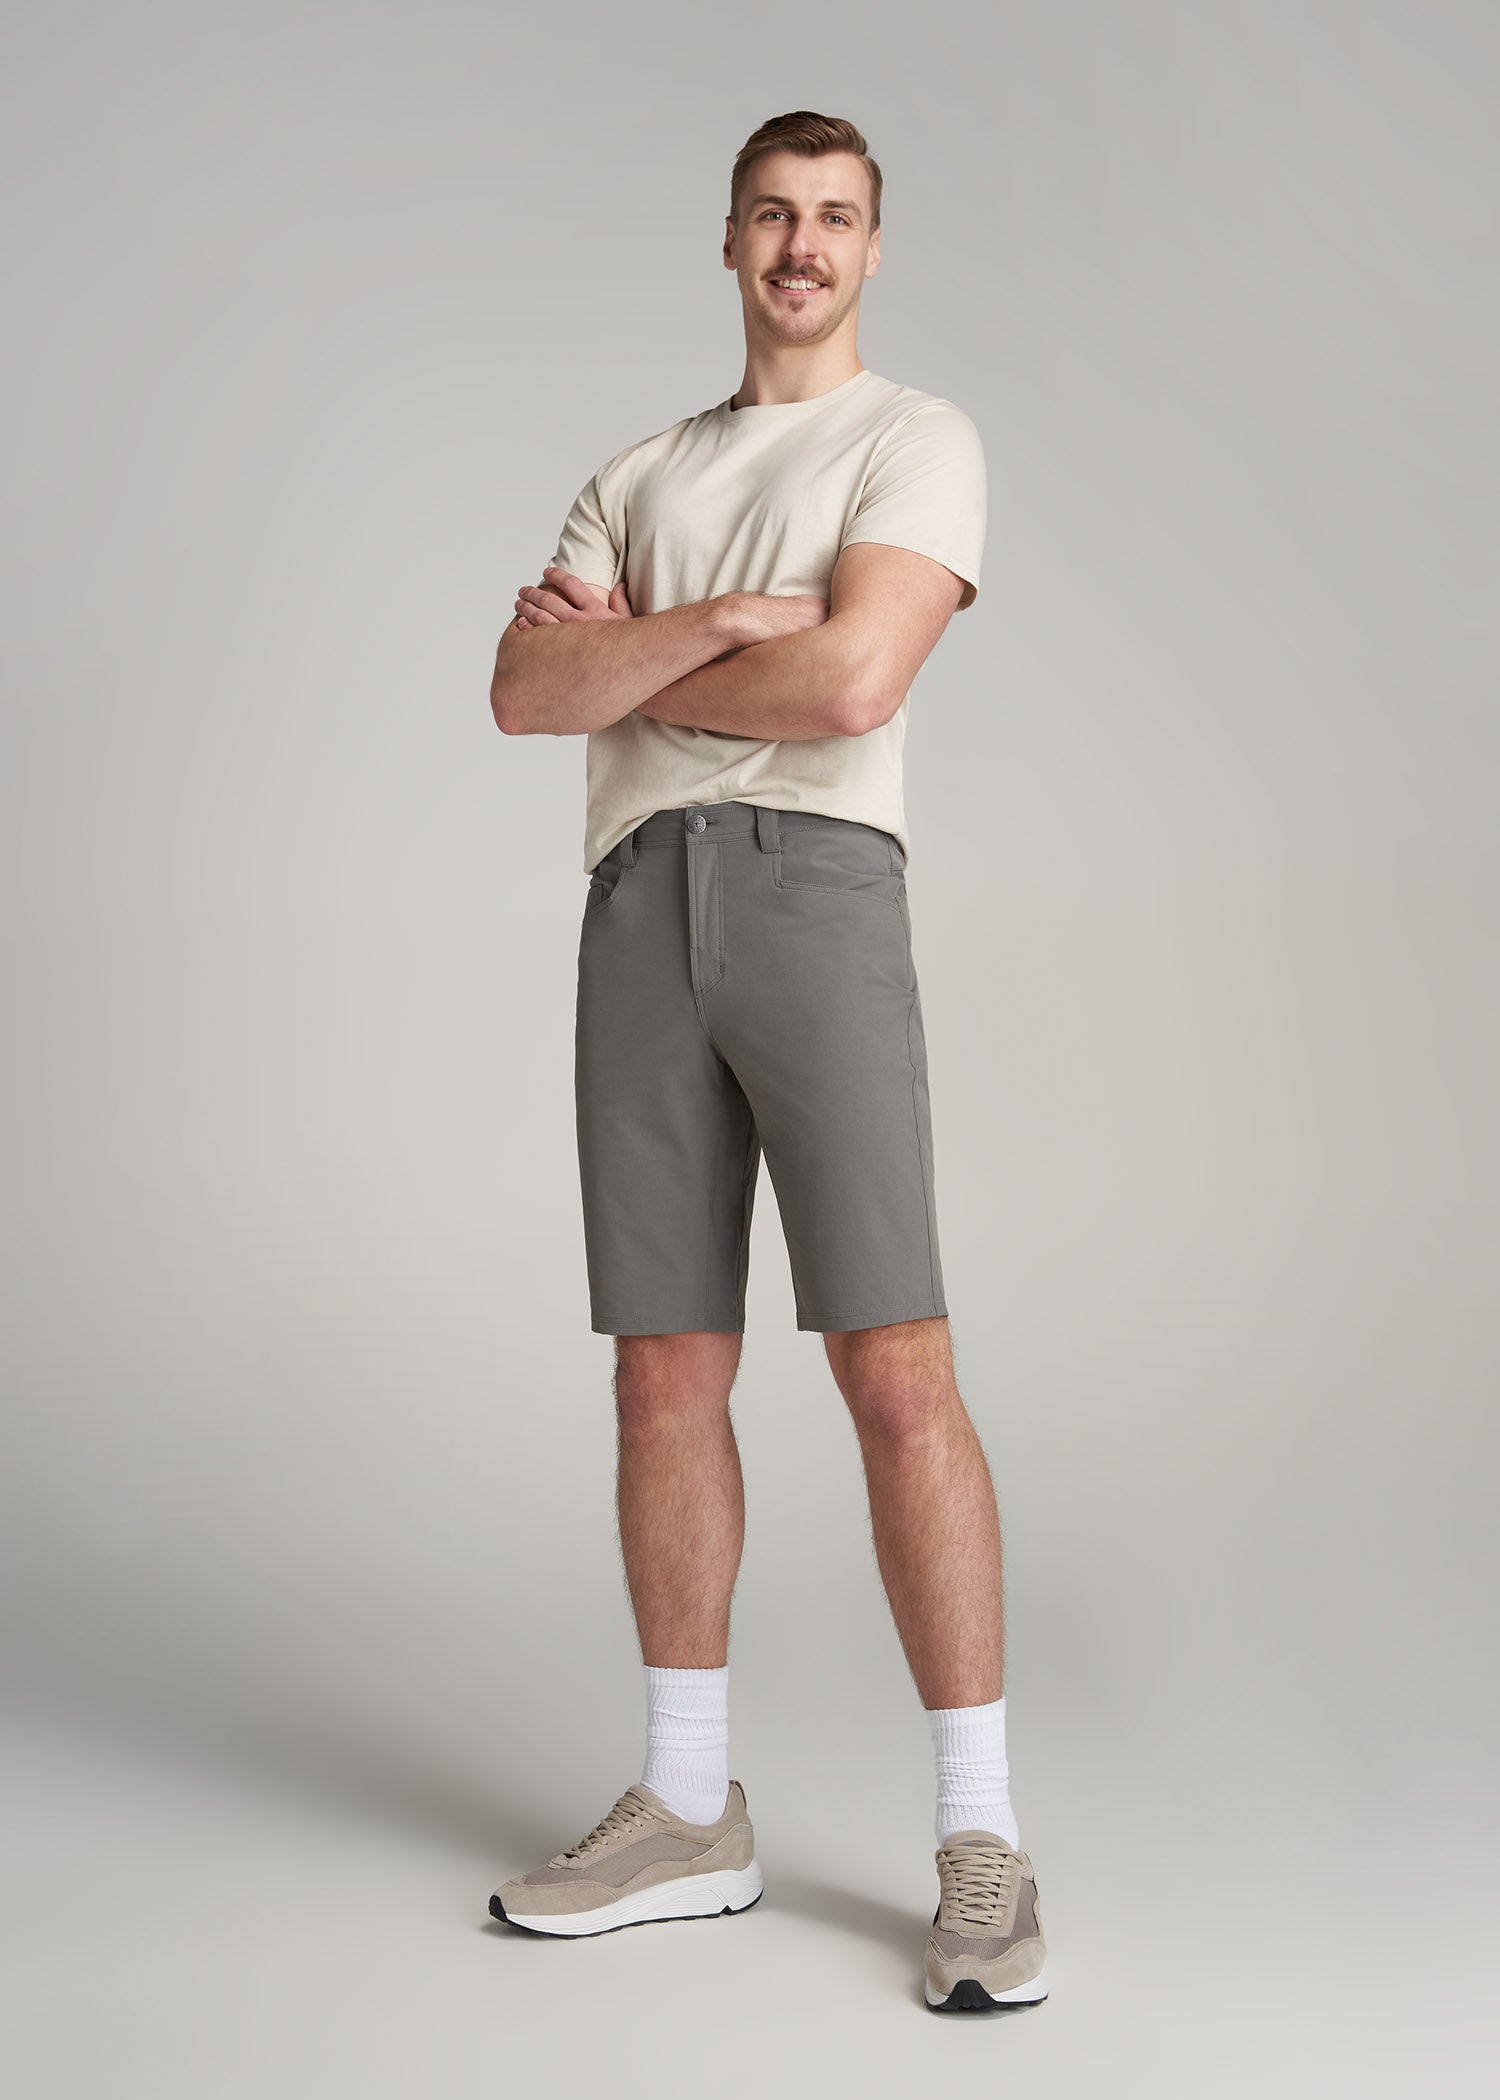 Tall Men's Hiking Shorts: Tan Hiking Shorts for Men